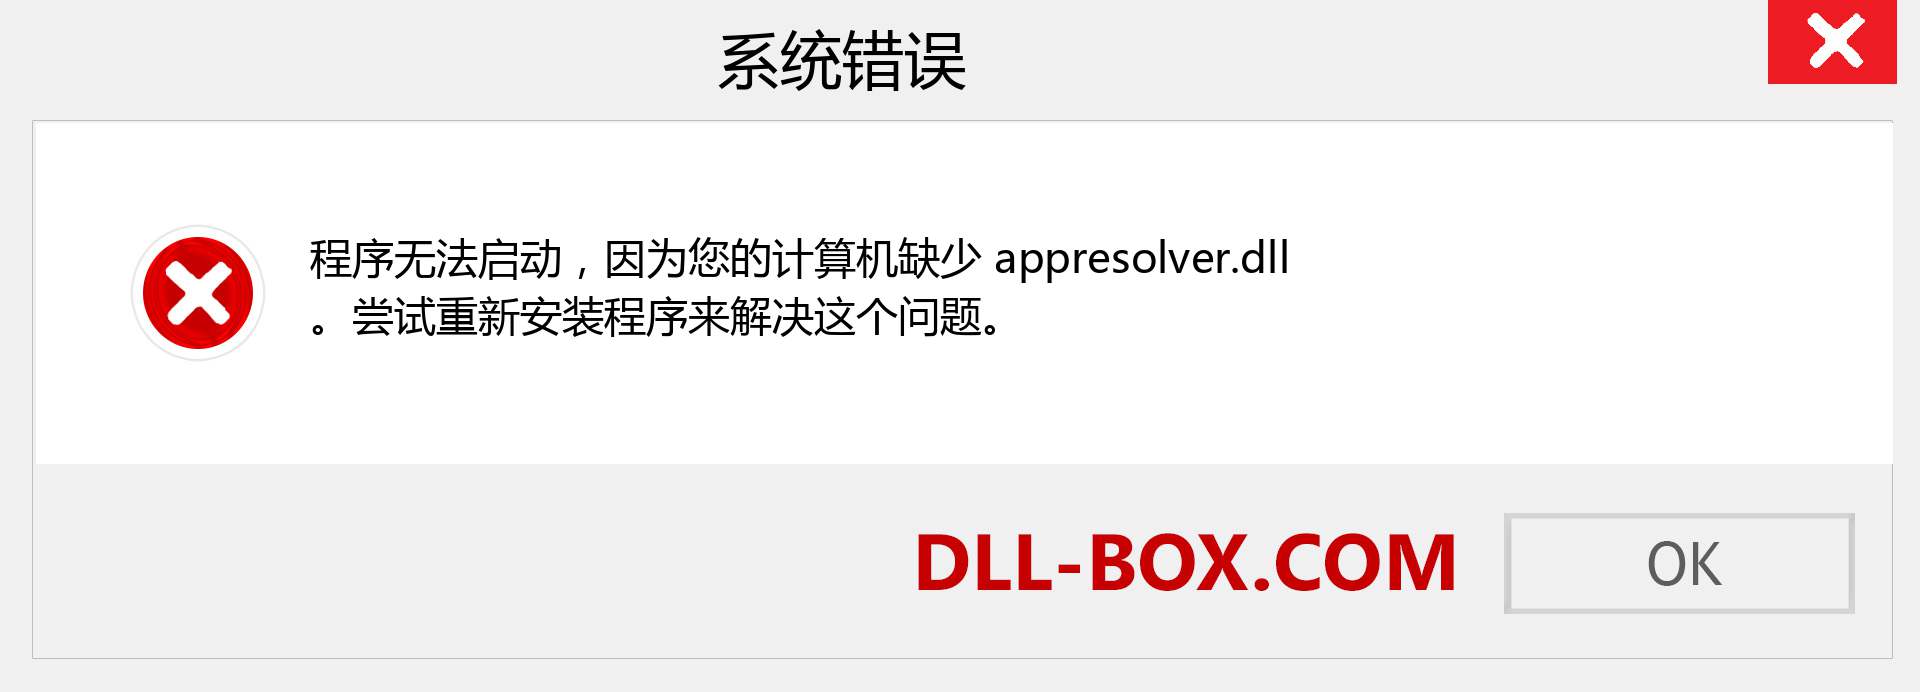 appresolver.dll 文件丢失？。 适用于 Windows 7、8、10 的下载 - 修复 Windows、照片、图像上的 appresolver dll 丢失错误